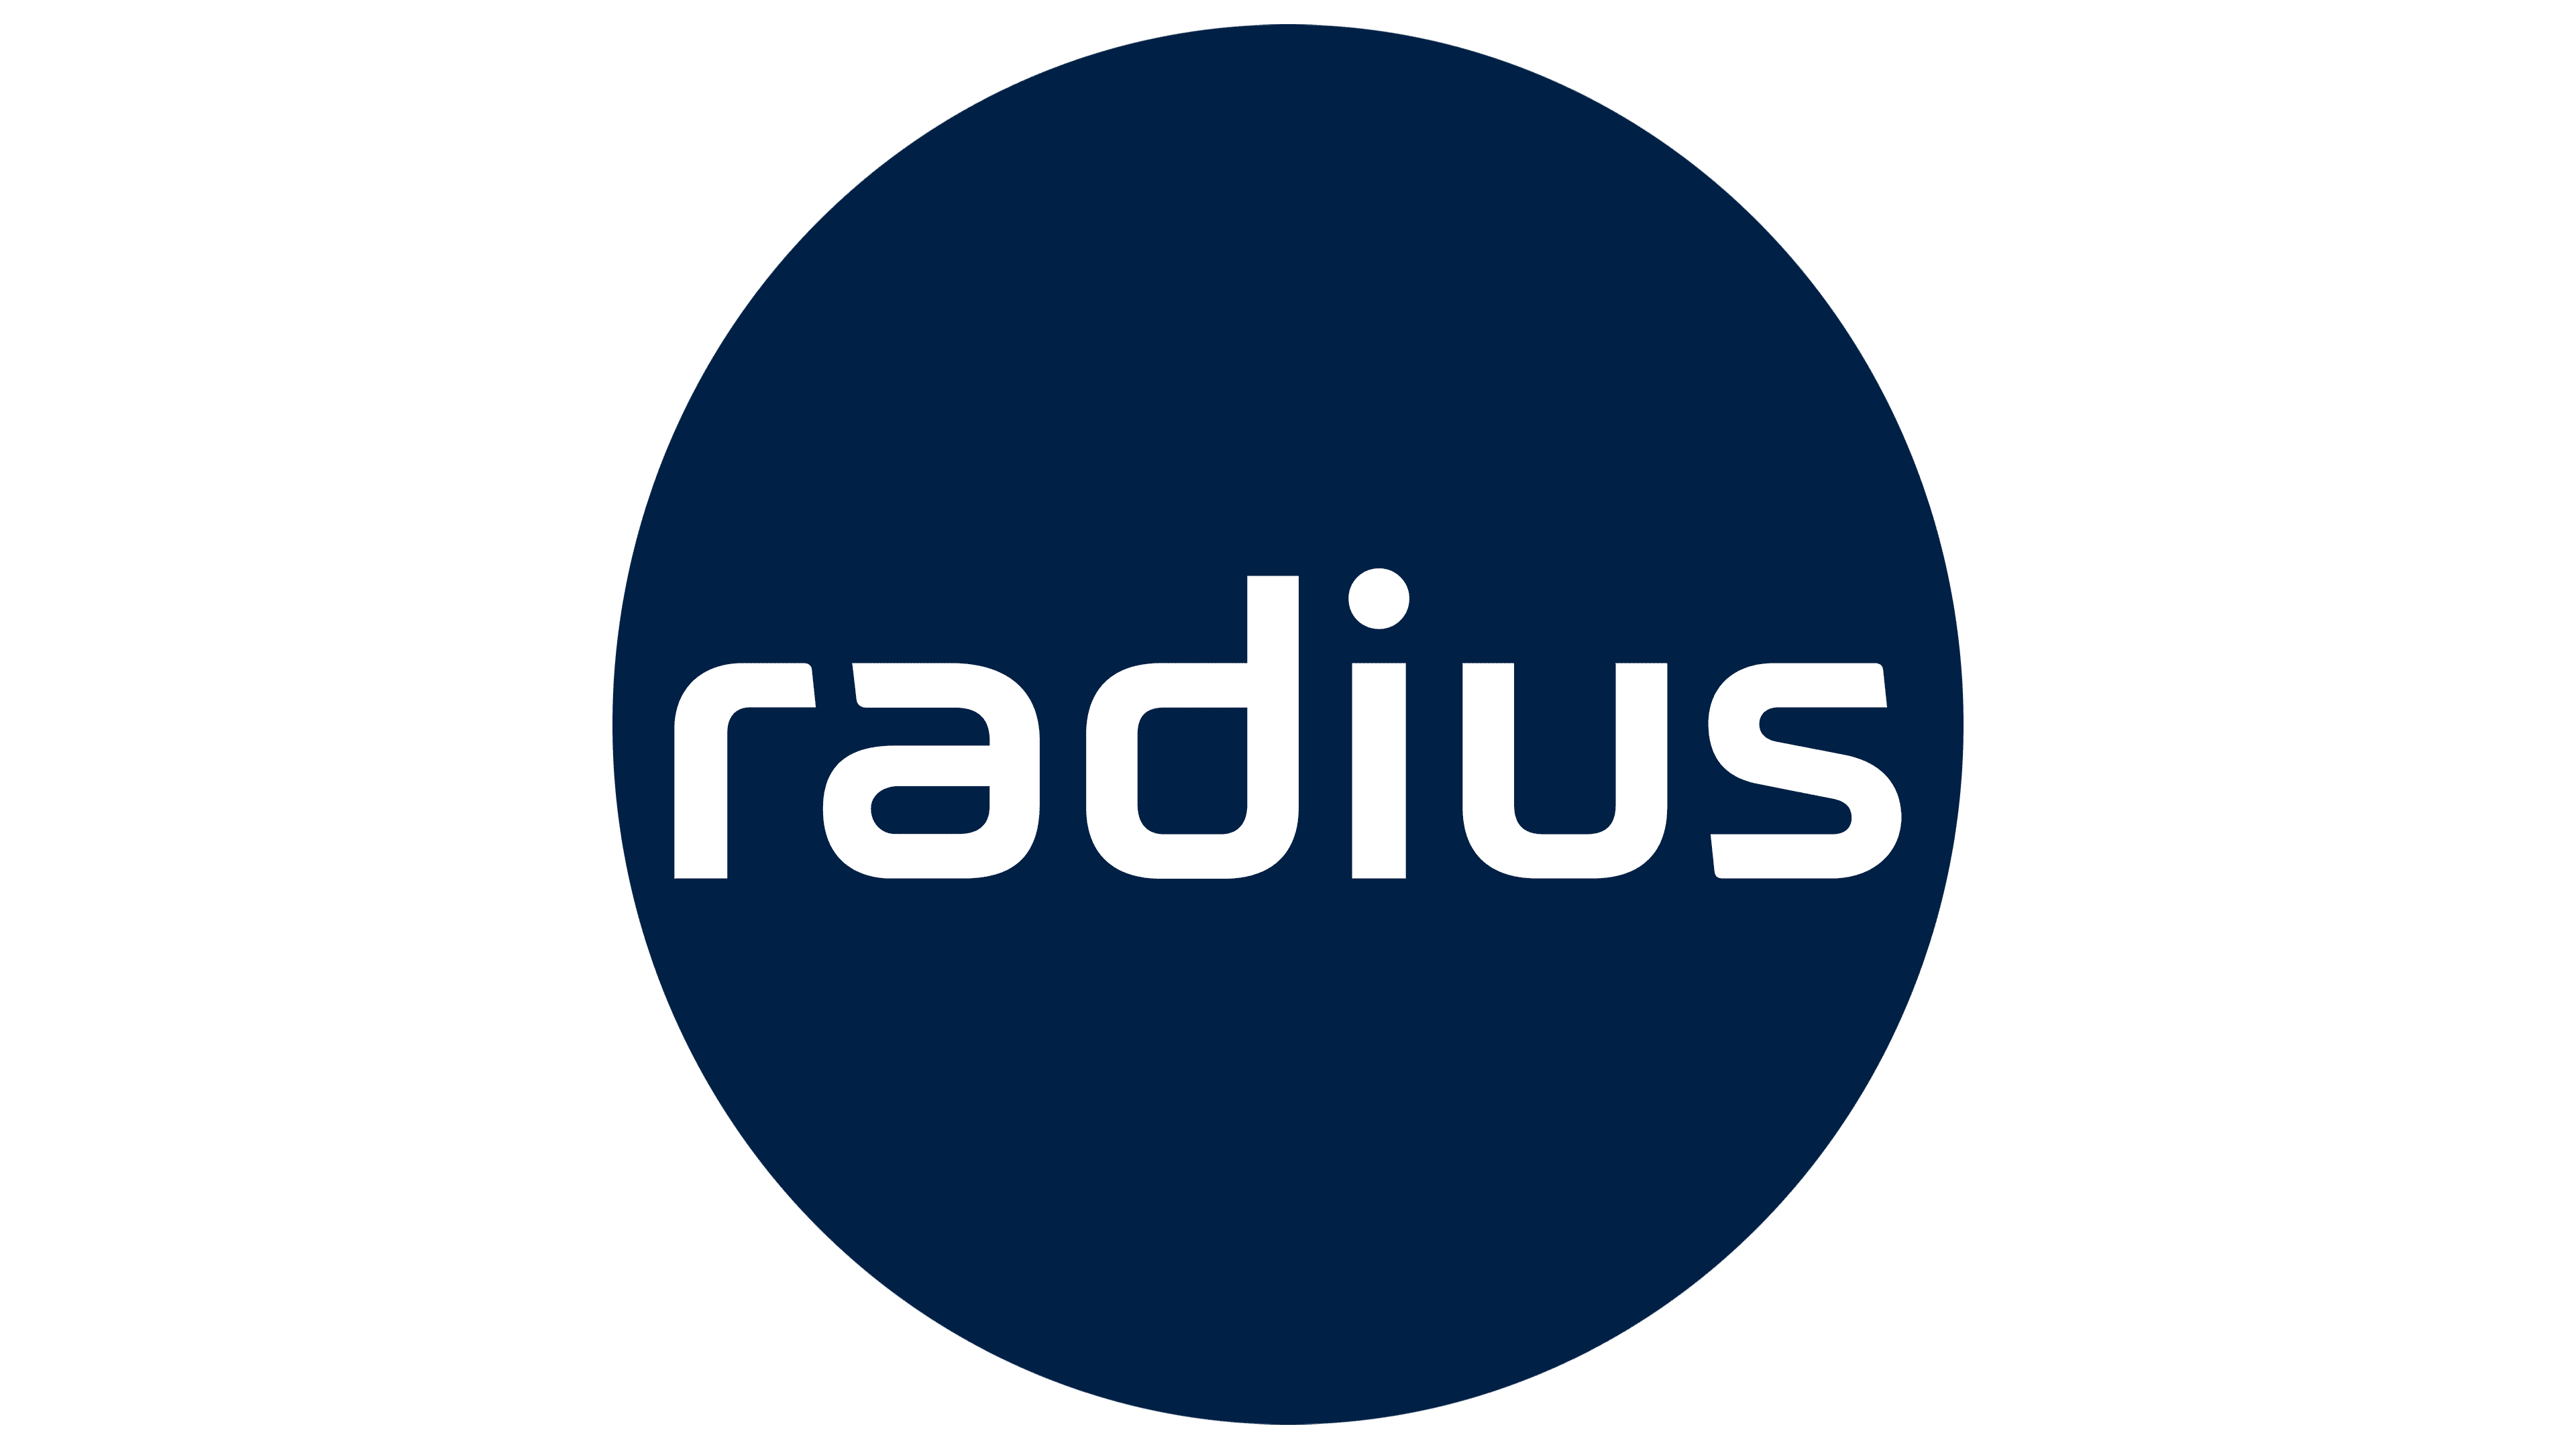 Radius Logo, meaning, history, PNG, SVG, vector